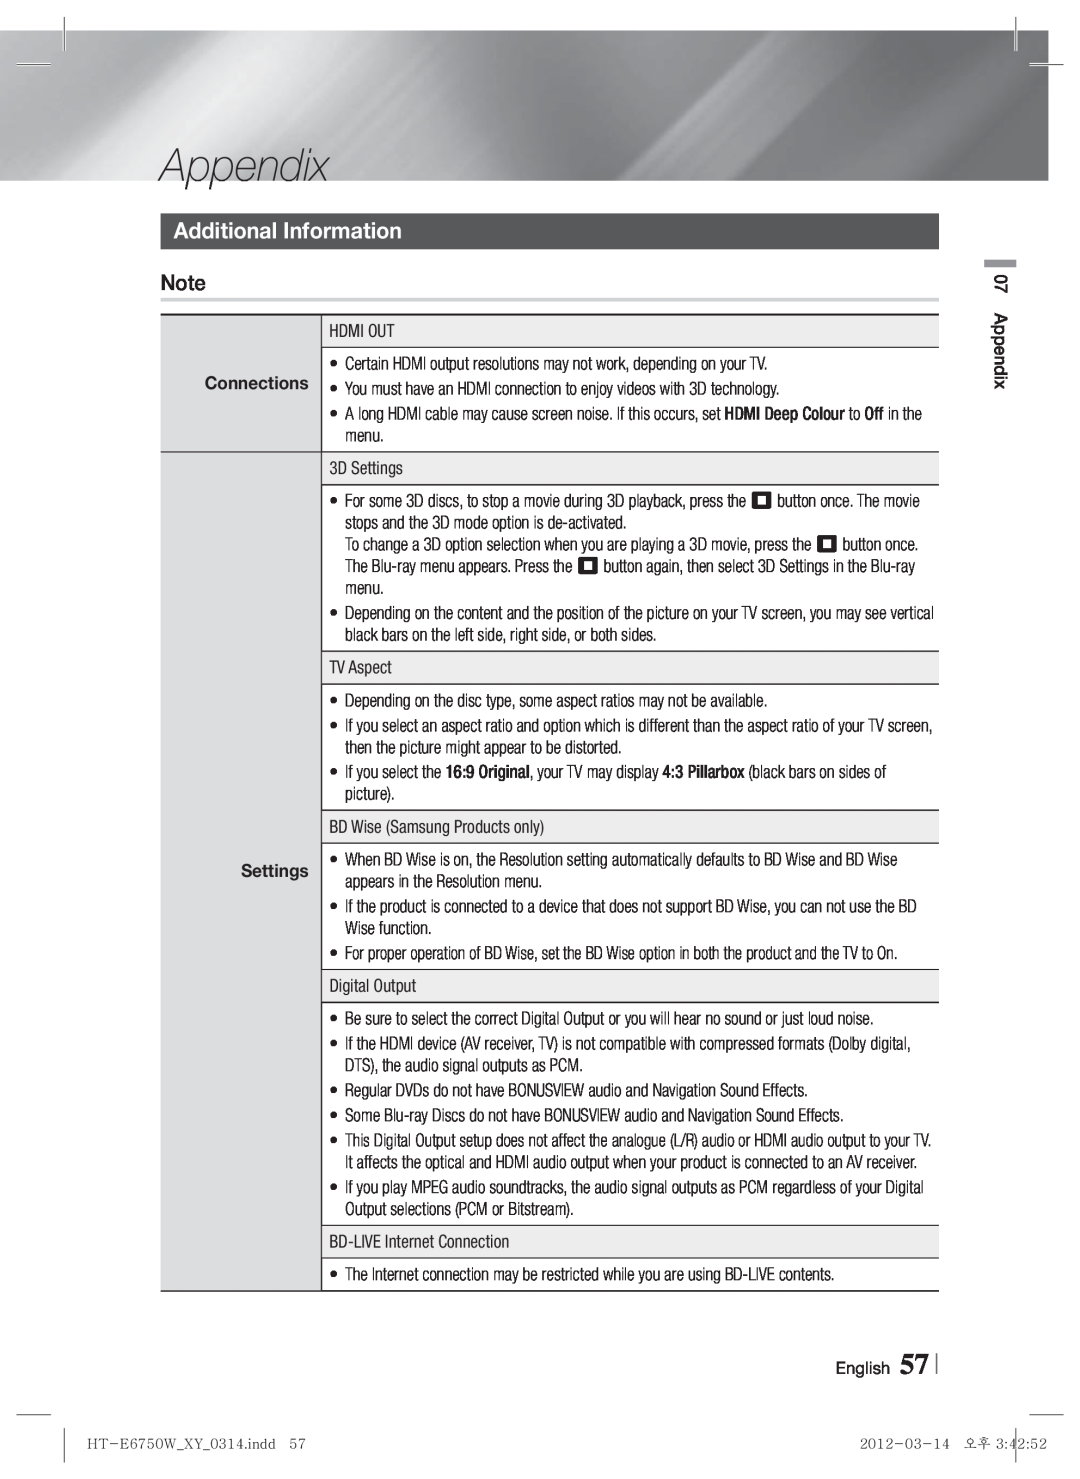 Samsung HT-E6750W user manual Appendix, Additional Information, Settings 